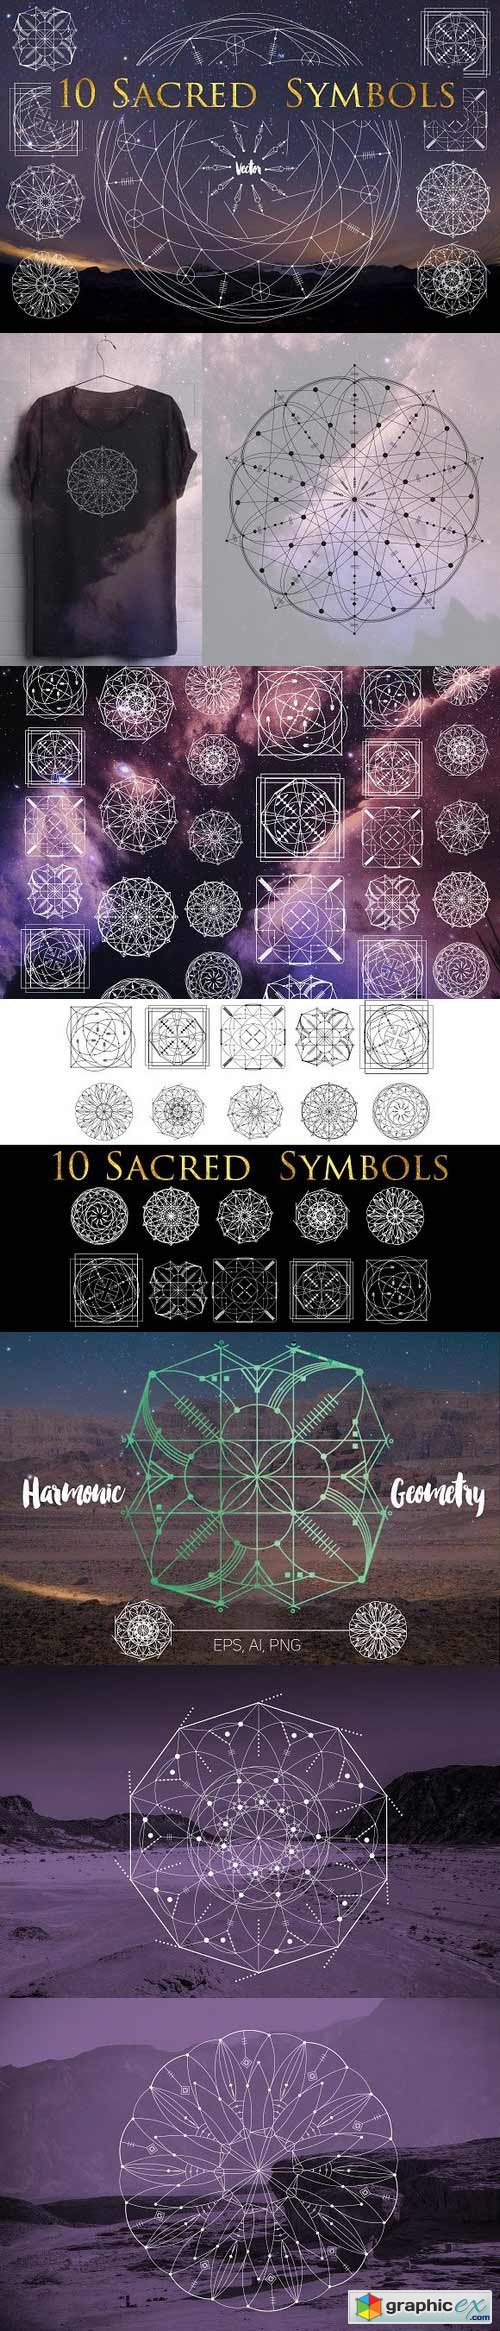 10 Sacred symbols